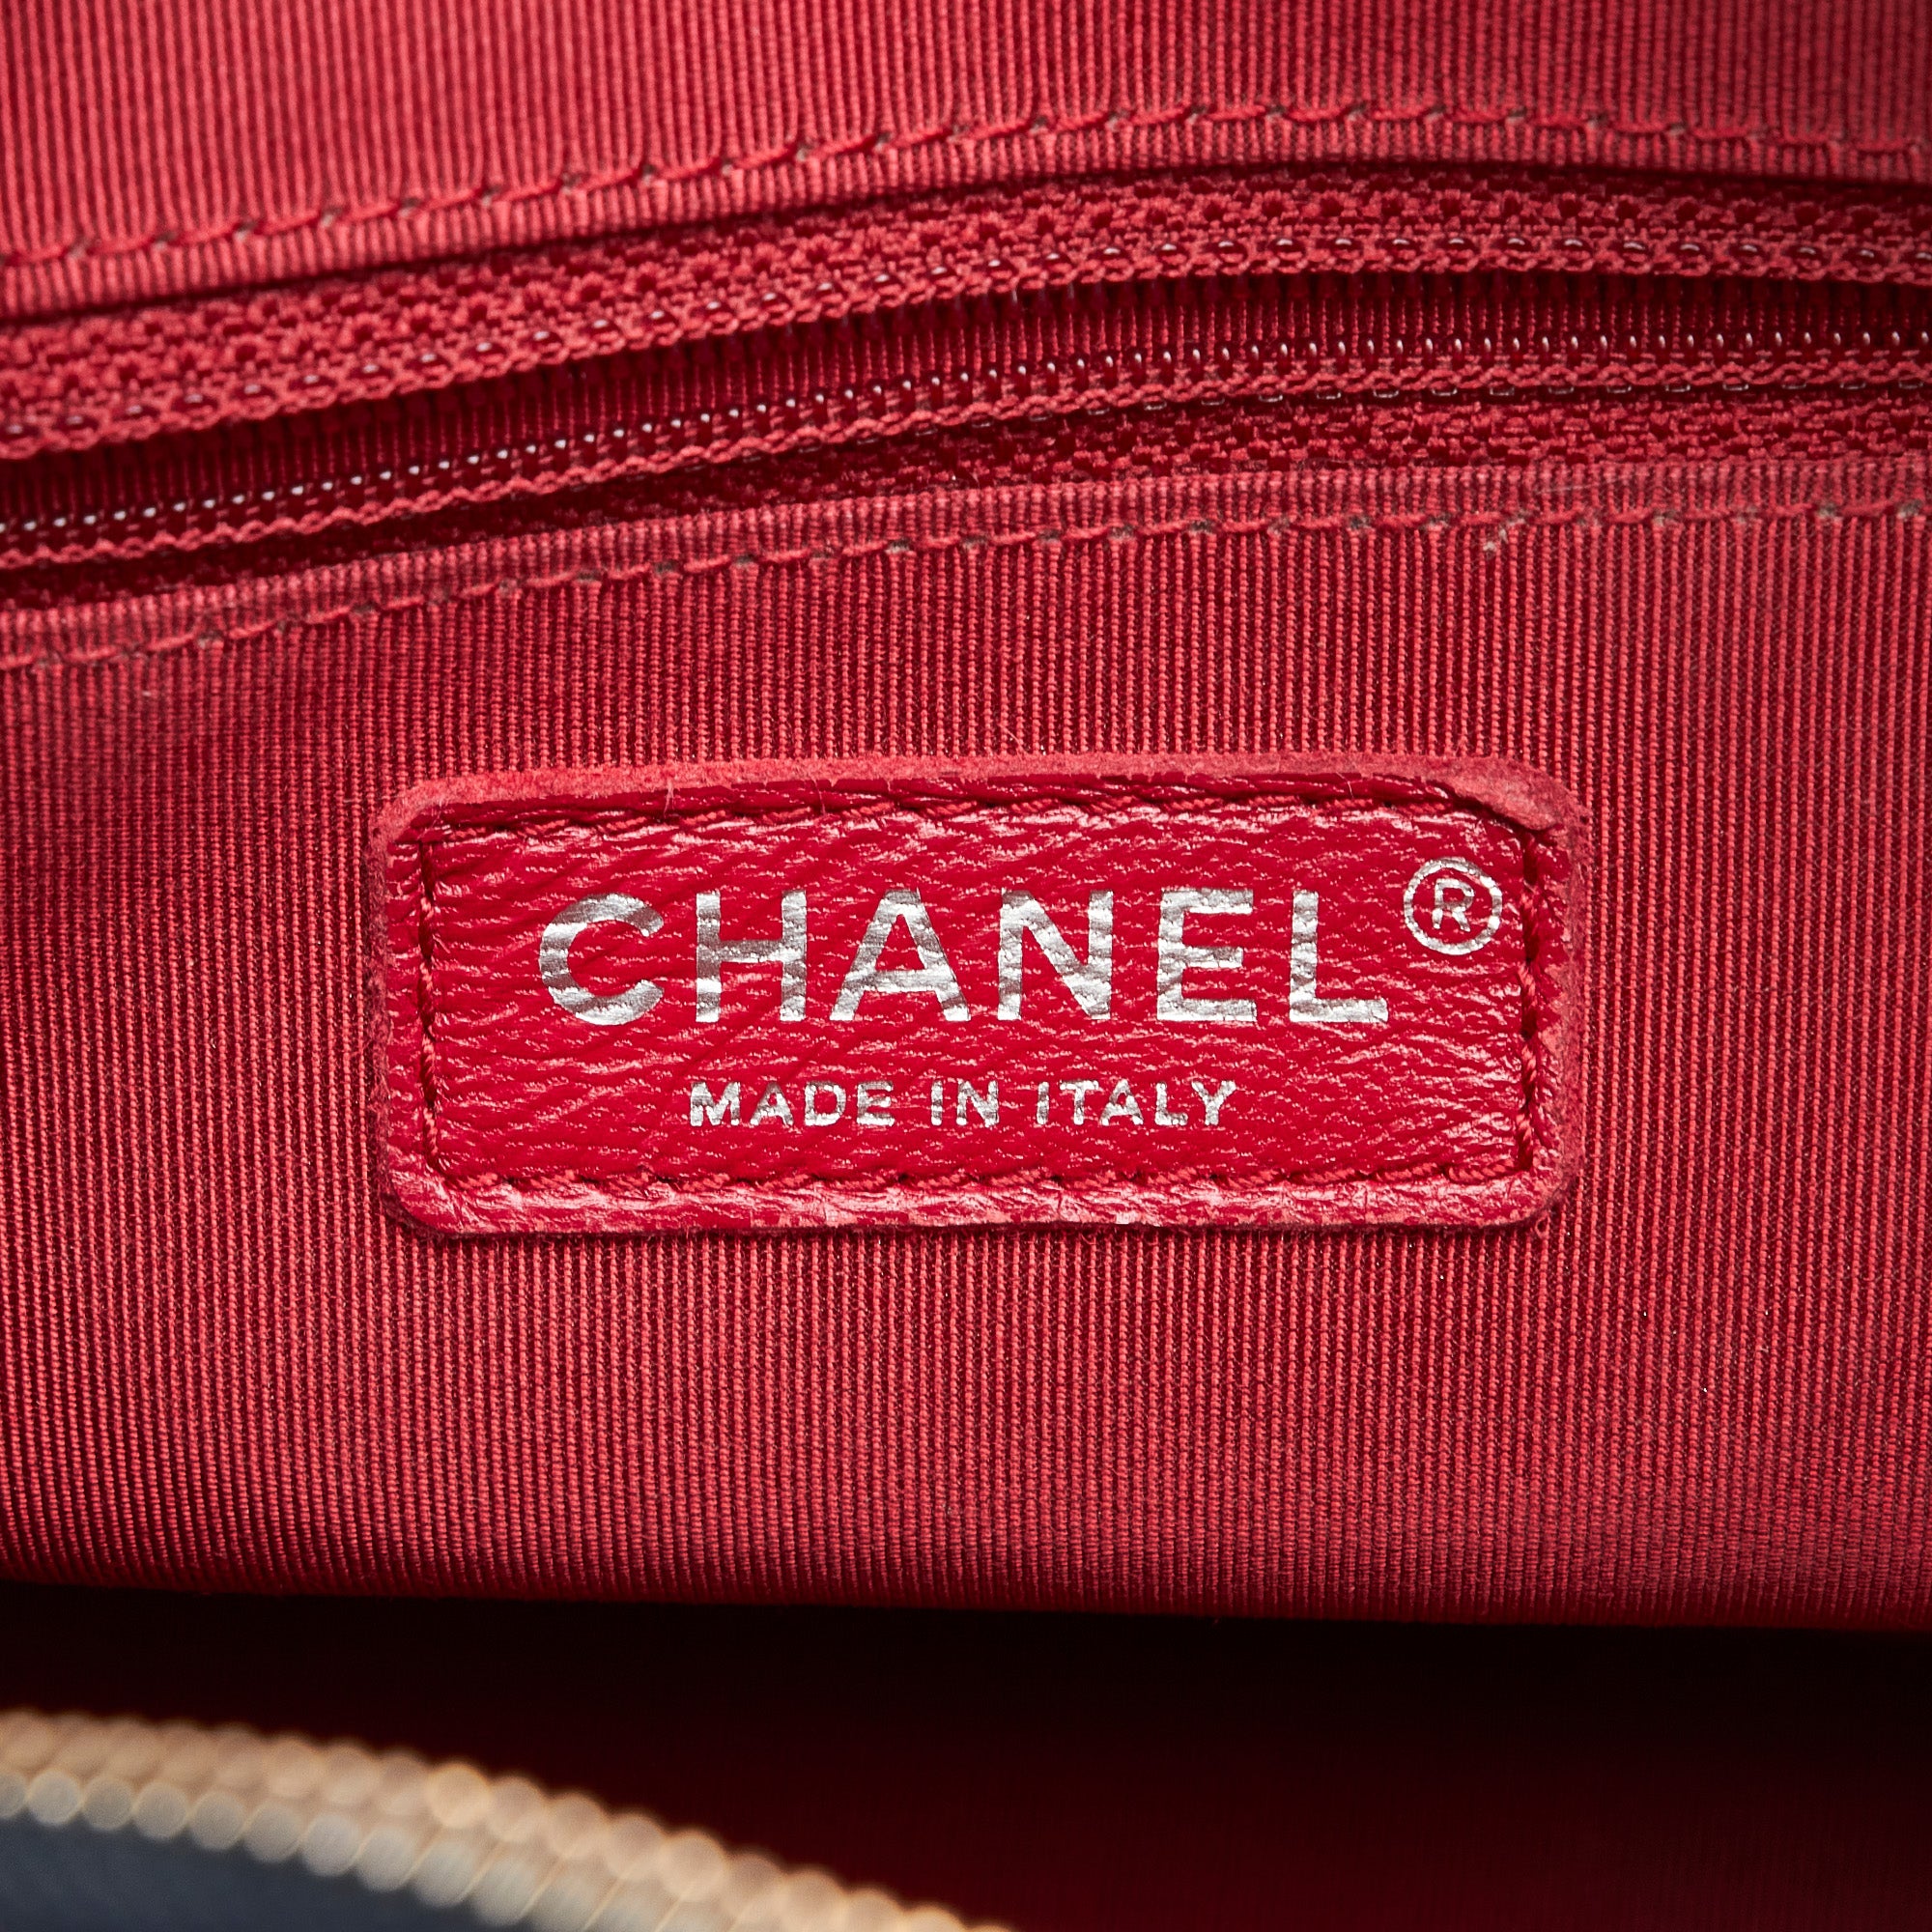 Chanel Tweed Small Gabrielle Bag - Blue Crossbody Bags, Handbags -  CHA577496